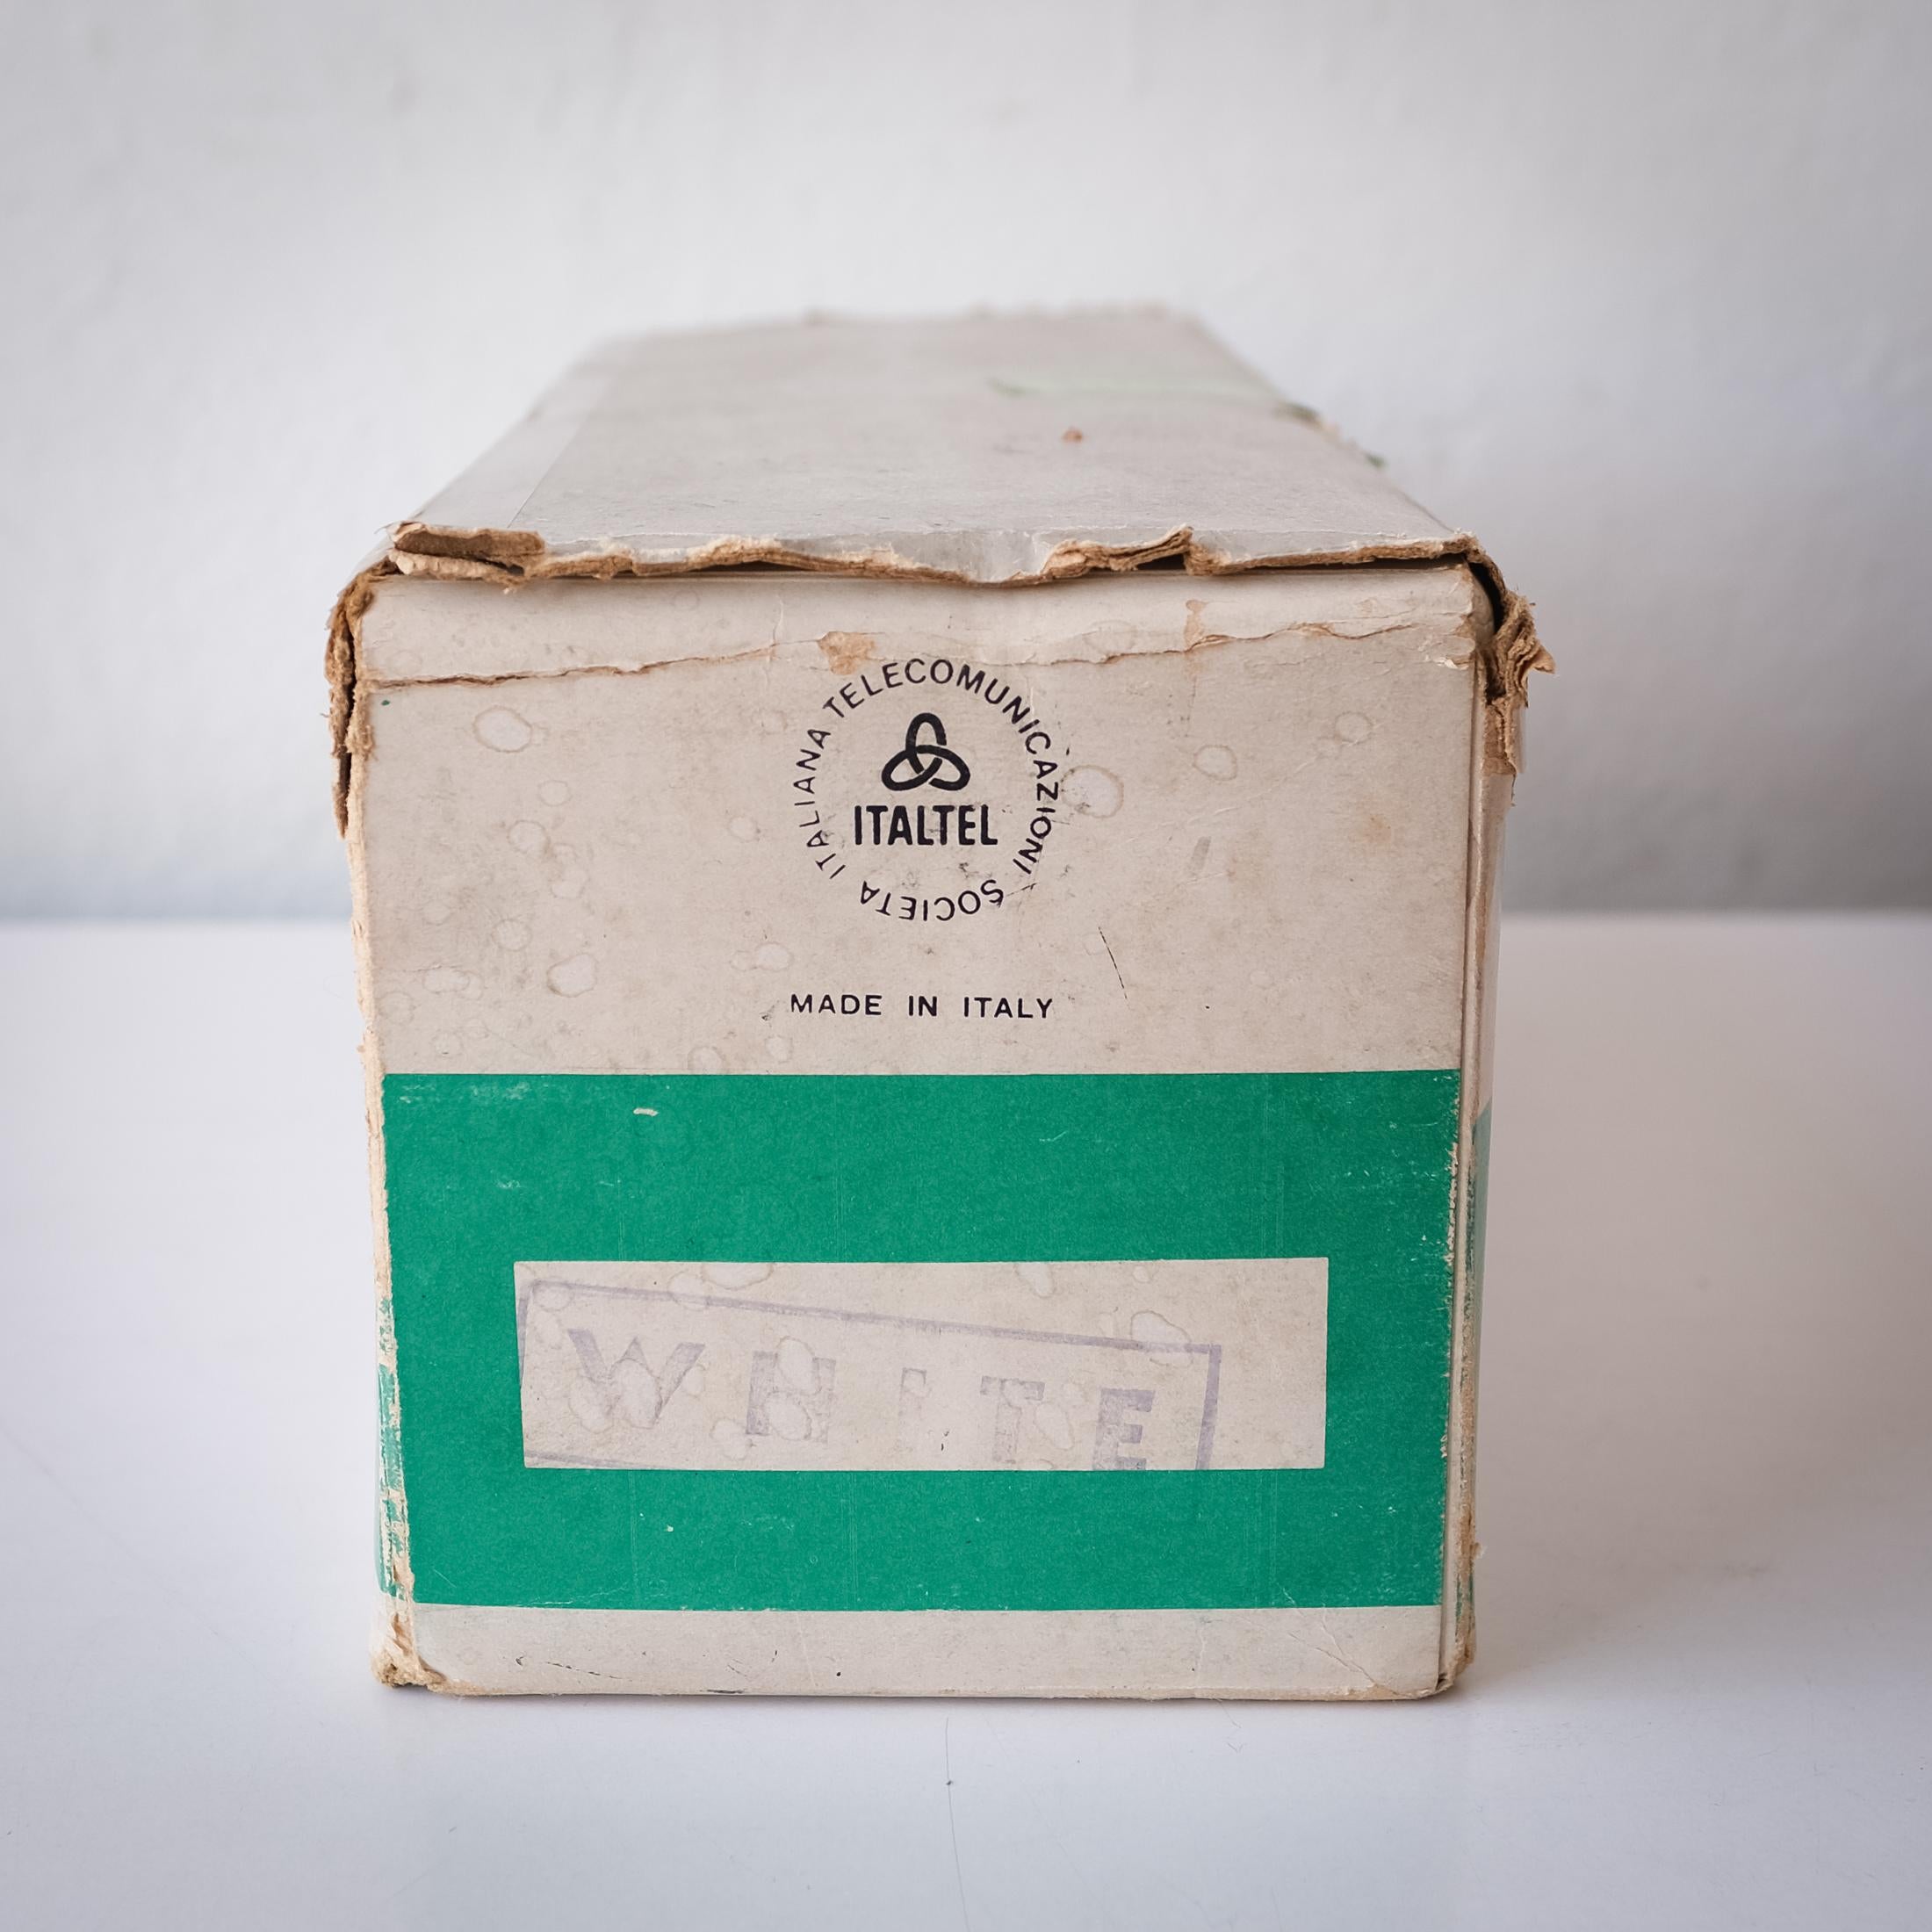 Grillo Folding Telephone by Marco Zanuso Richard Sapper with Box 1966 2